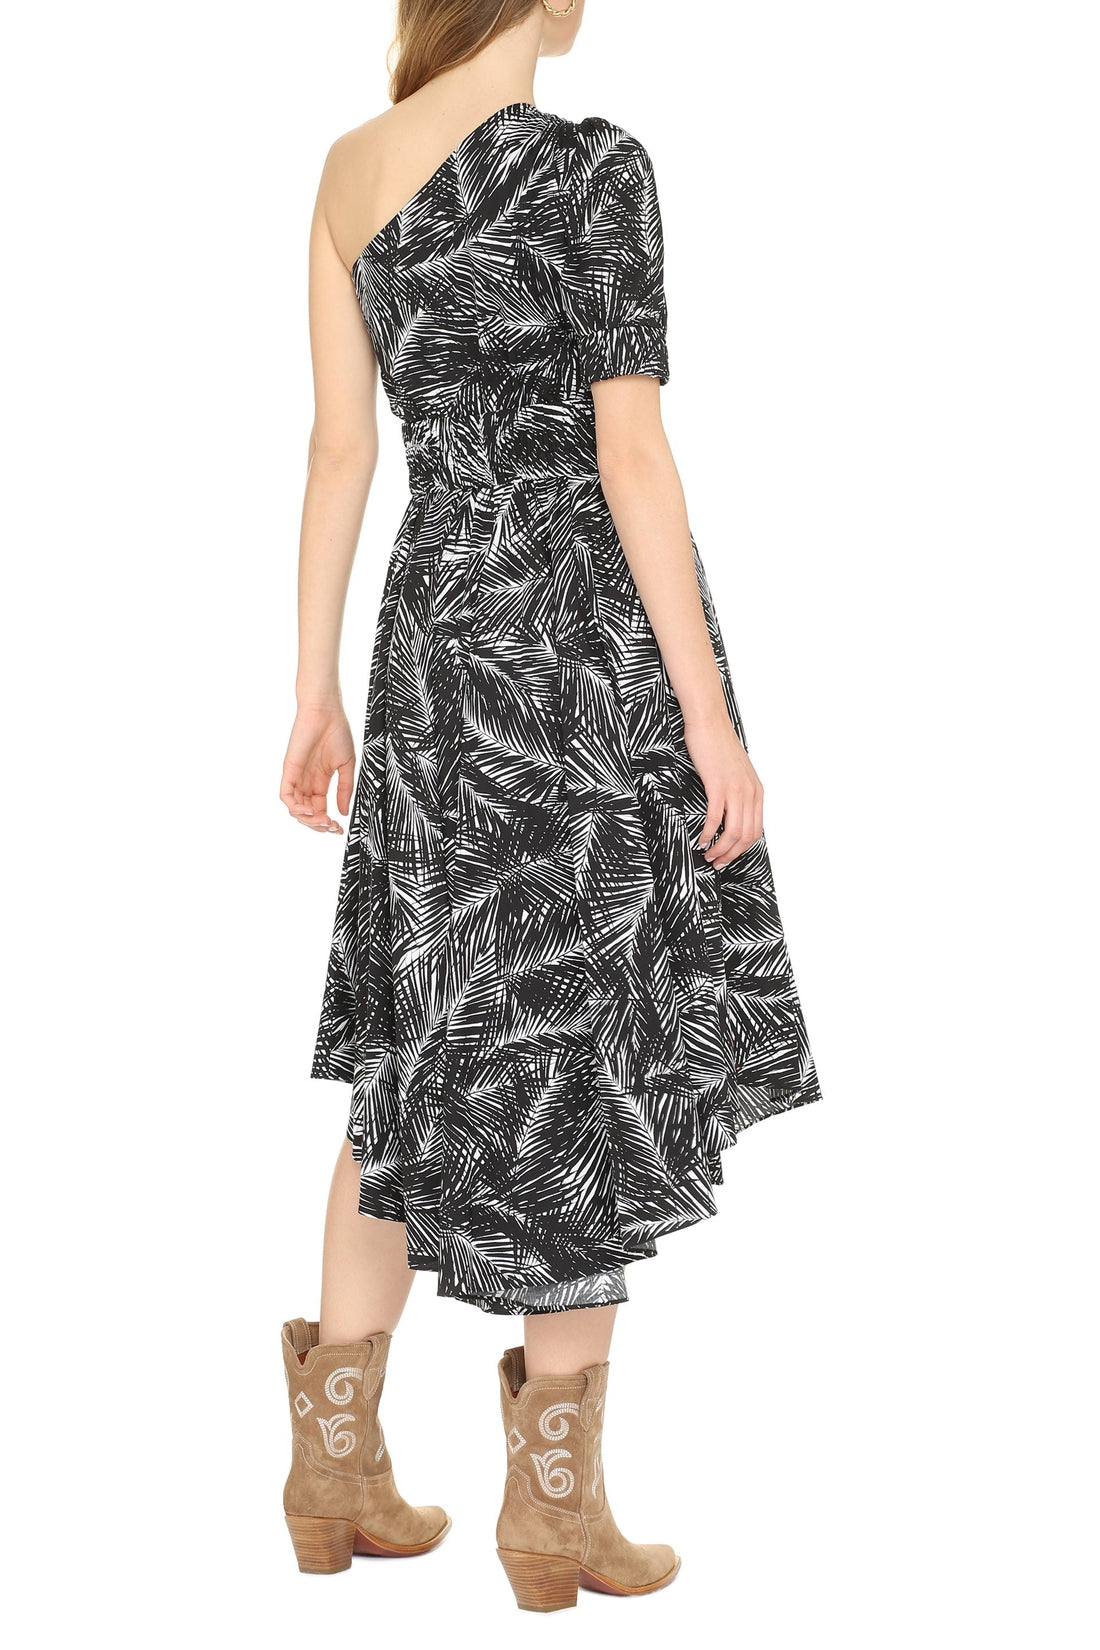 MICHAEL MICHAEL KORS-OUTLET-SALE-Printed one-shoulder dress-ARCHIVIST